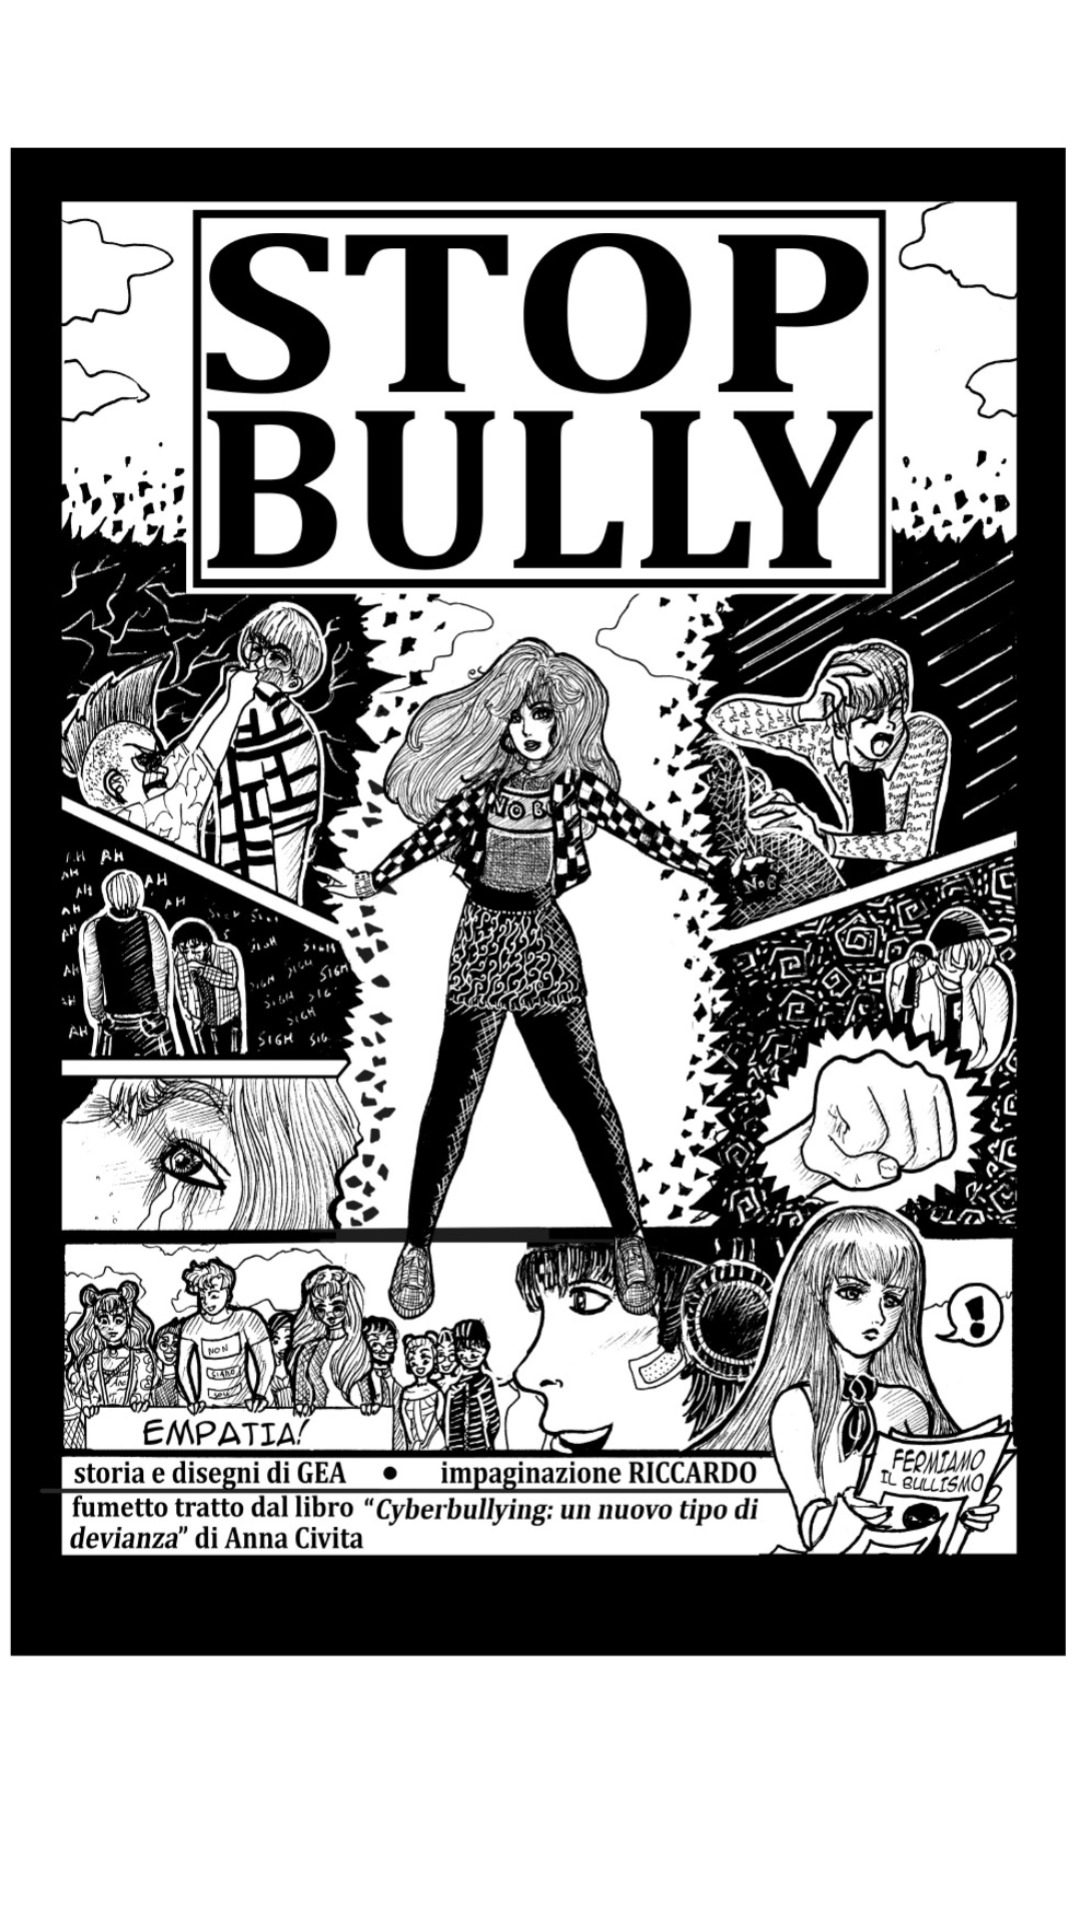 Fumetto Stop Bully copertina_verticale 1080x1920.jpeg